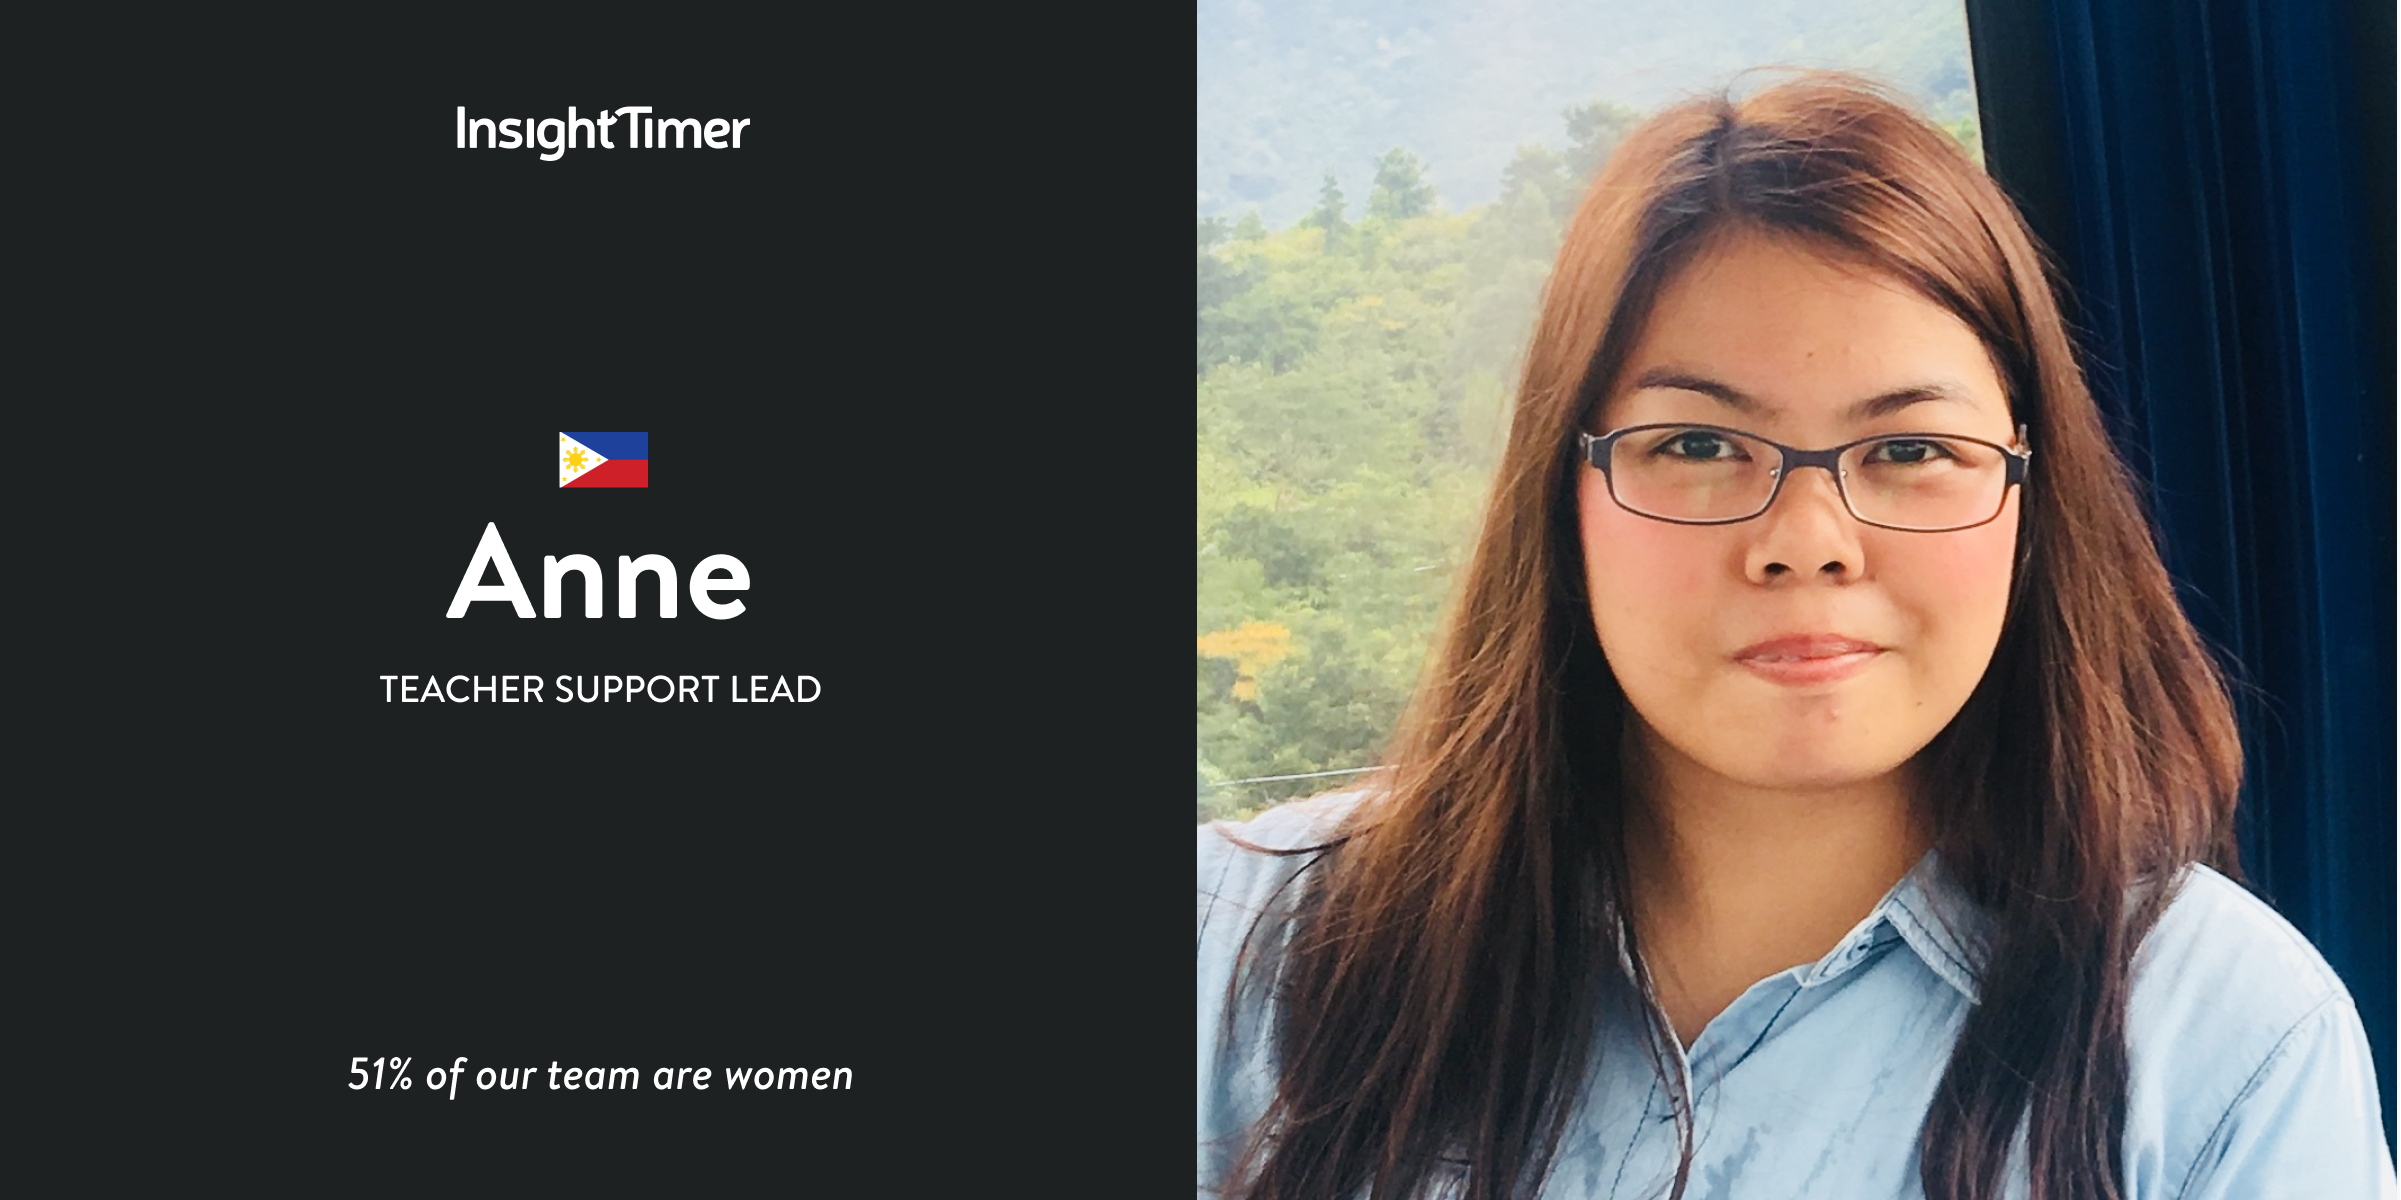 Meet Anne – Teacher Support Lead